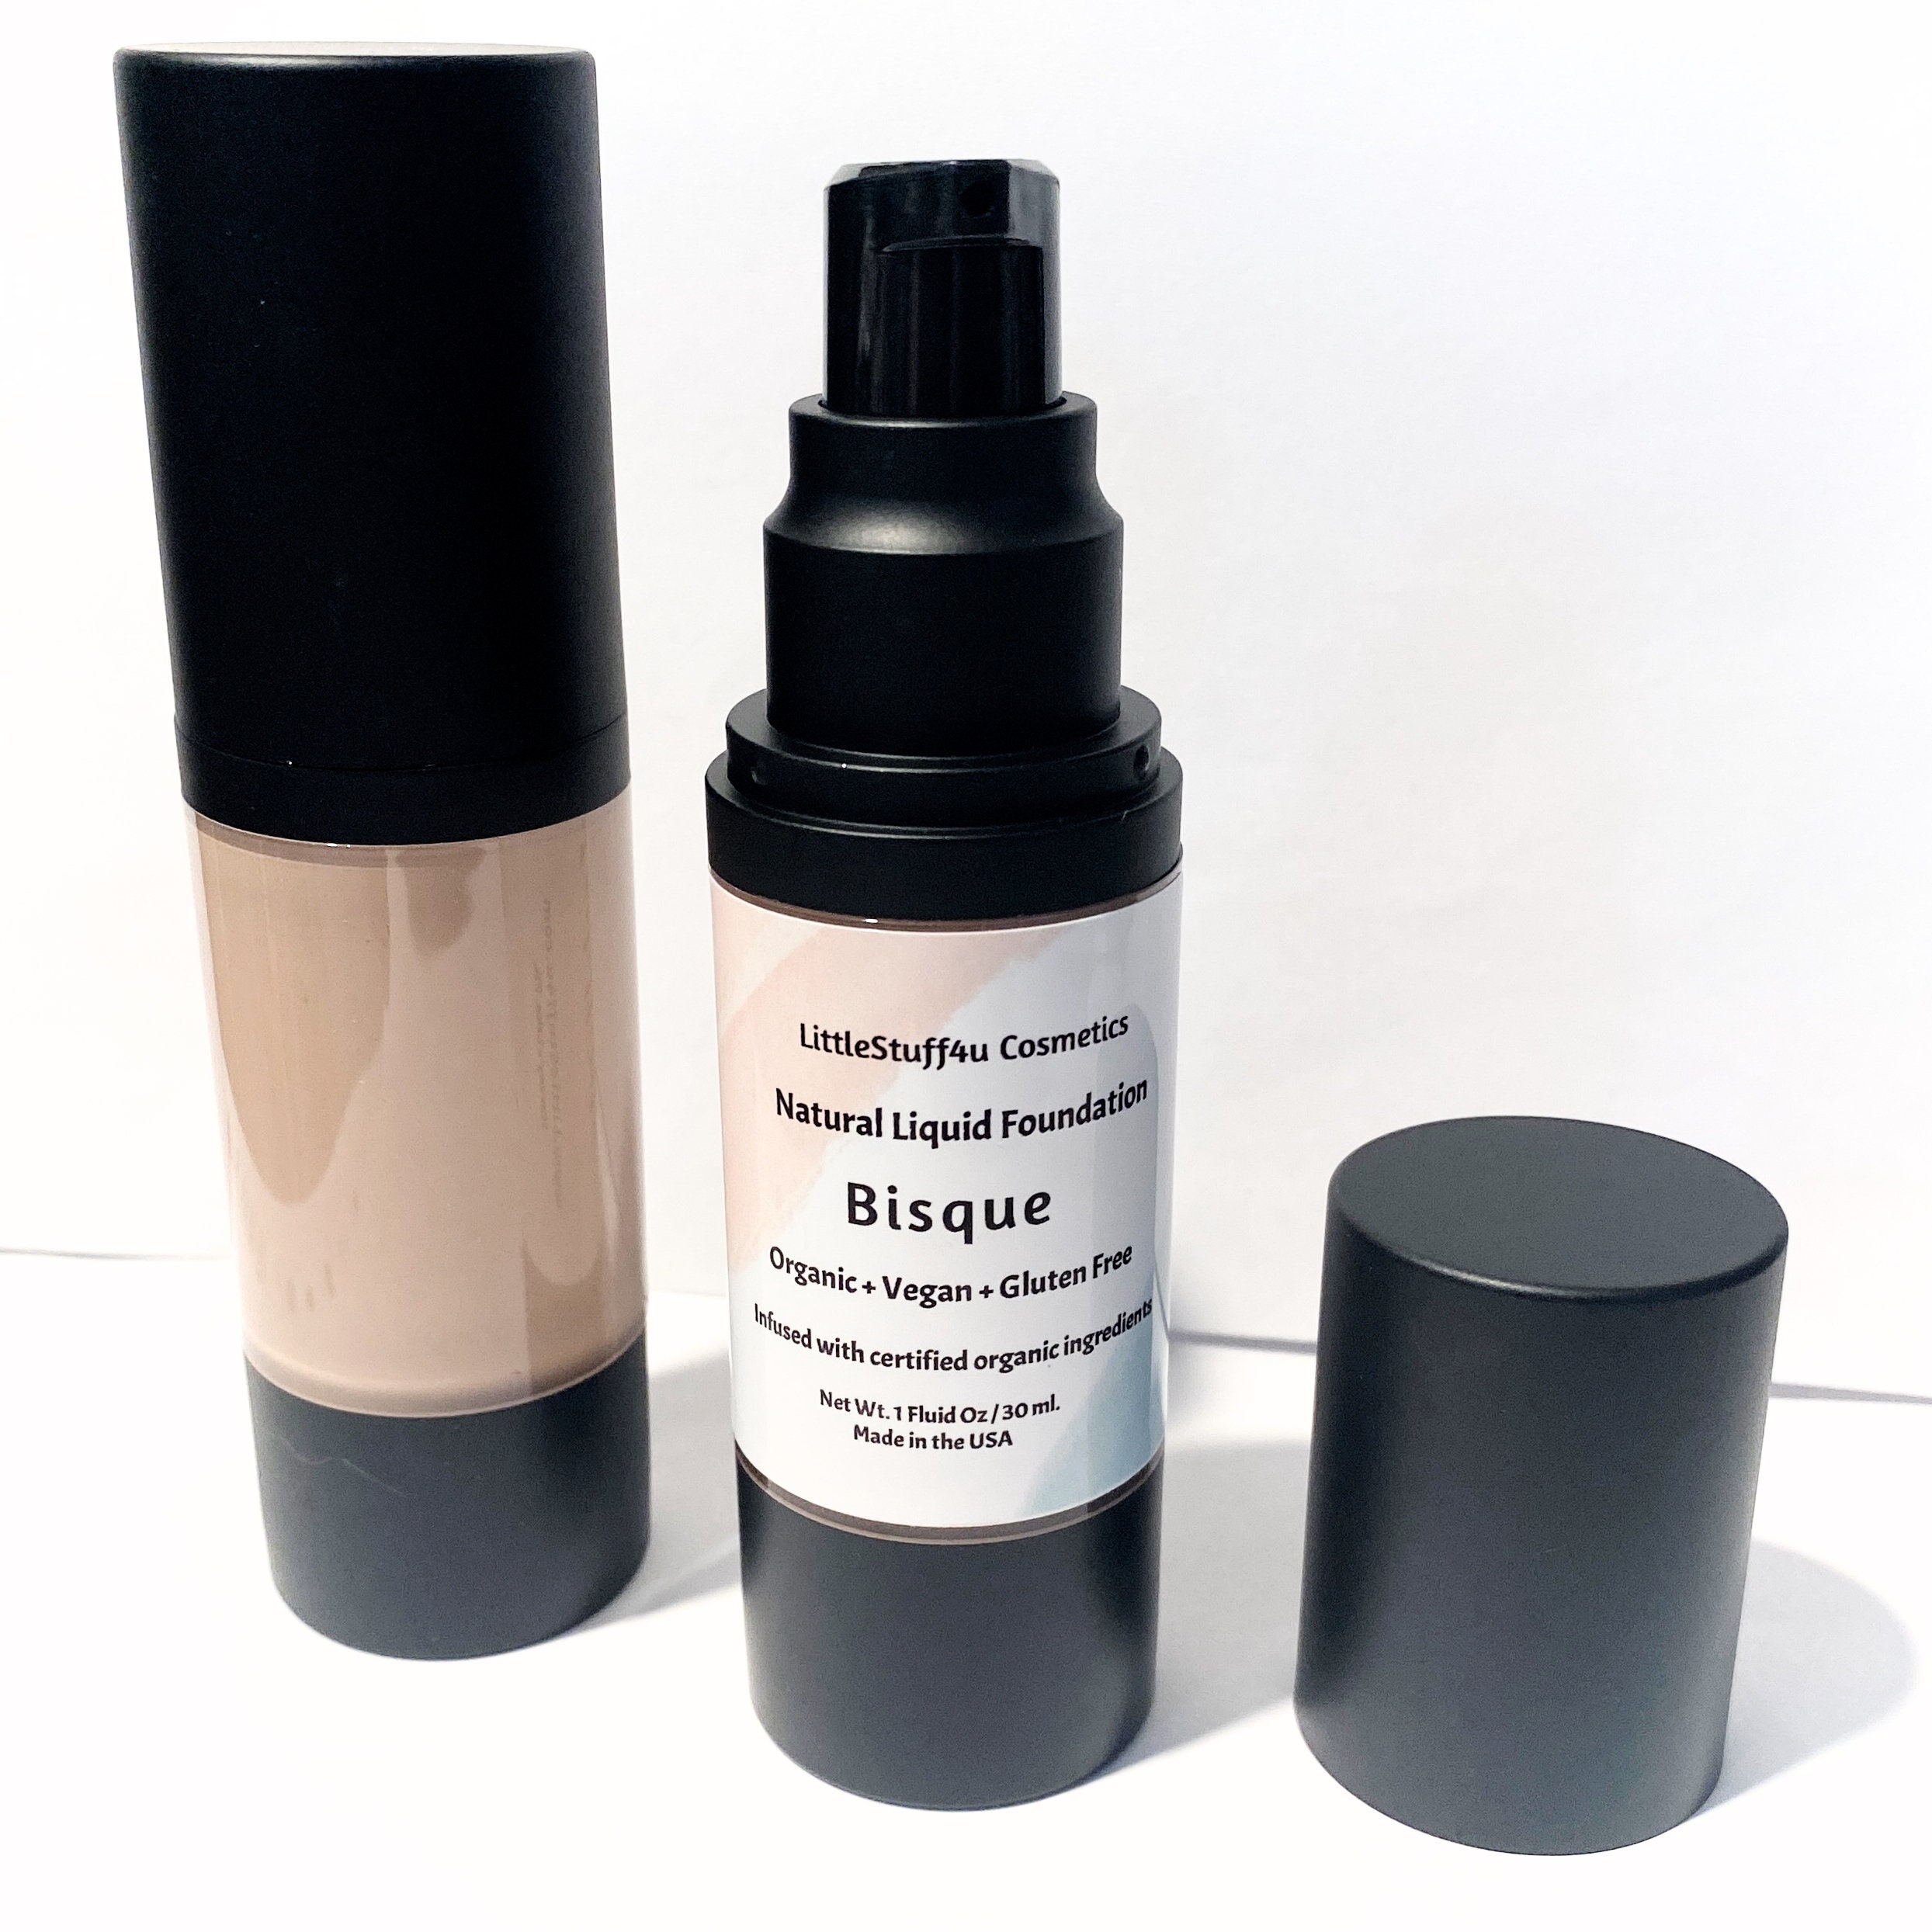 Royal Glow Liquid Germal Plus - Preservative For Skincare Formulation -  50ml